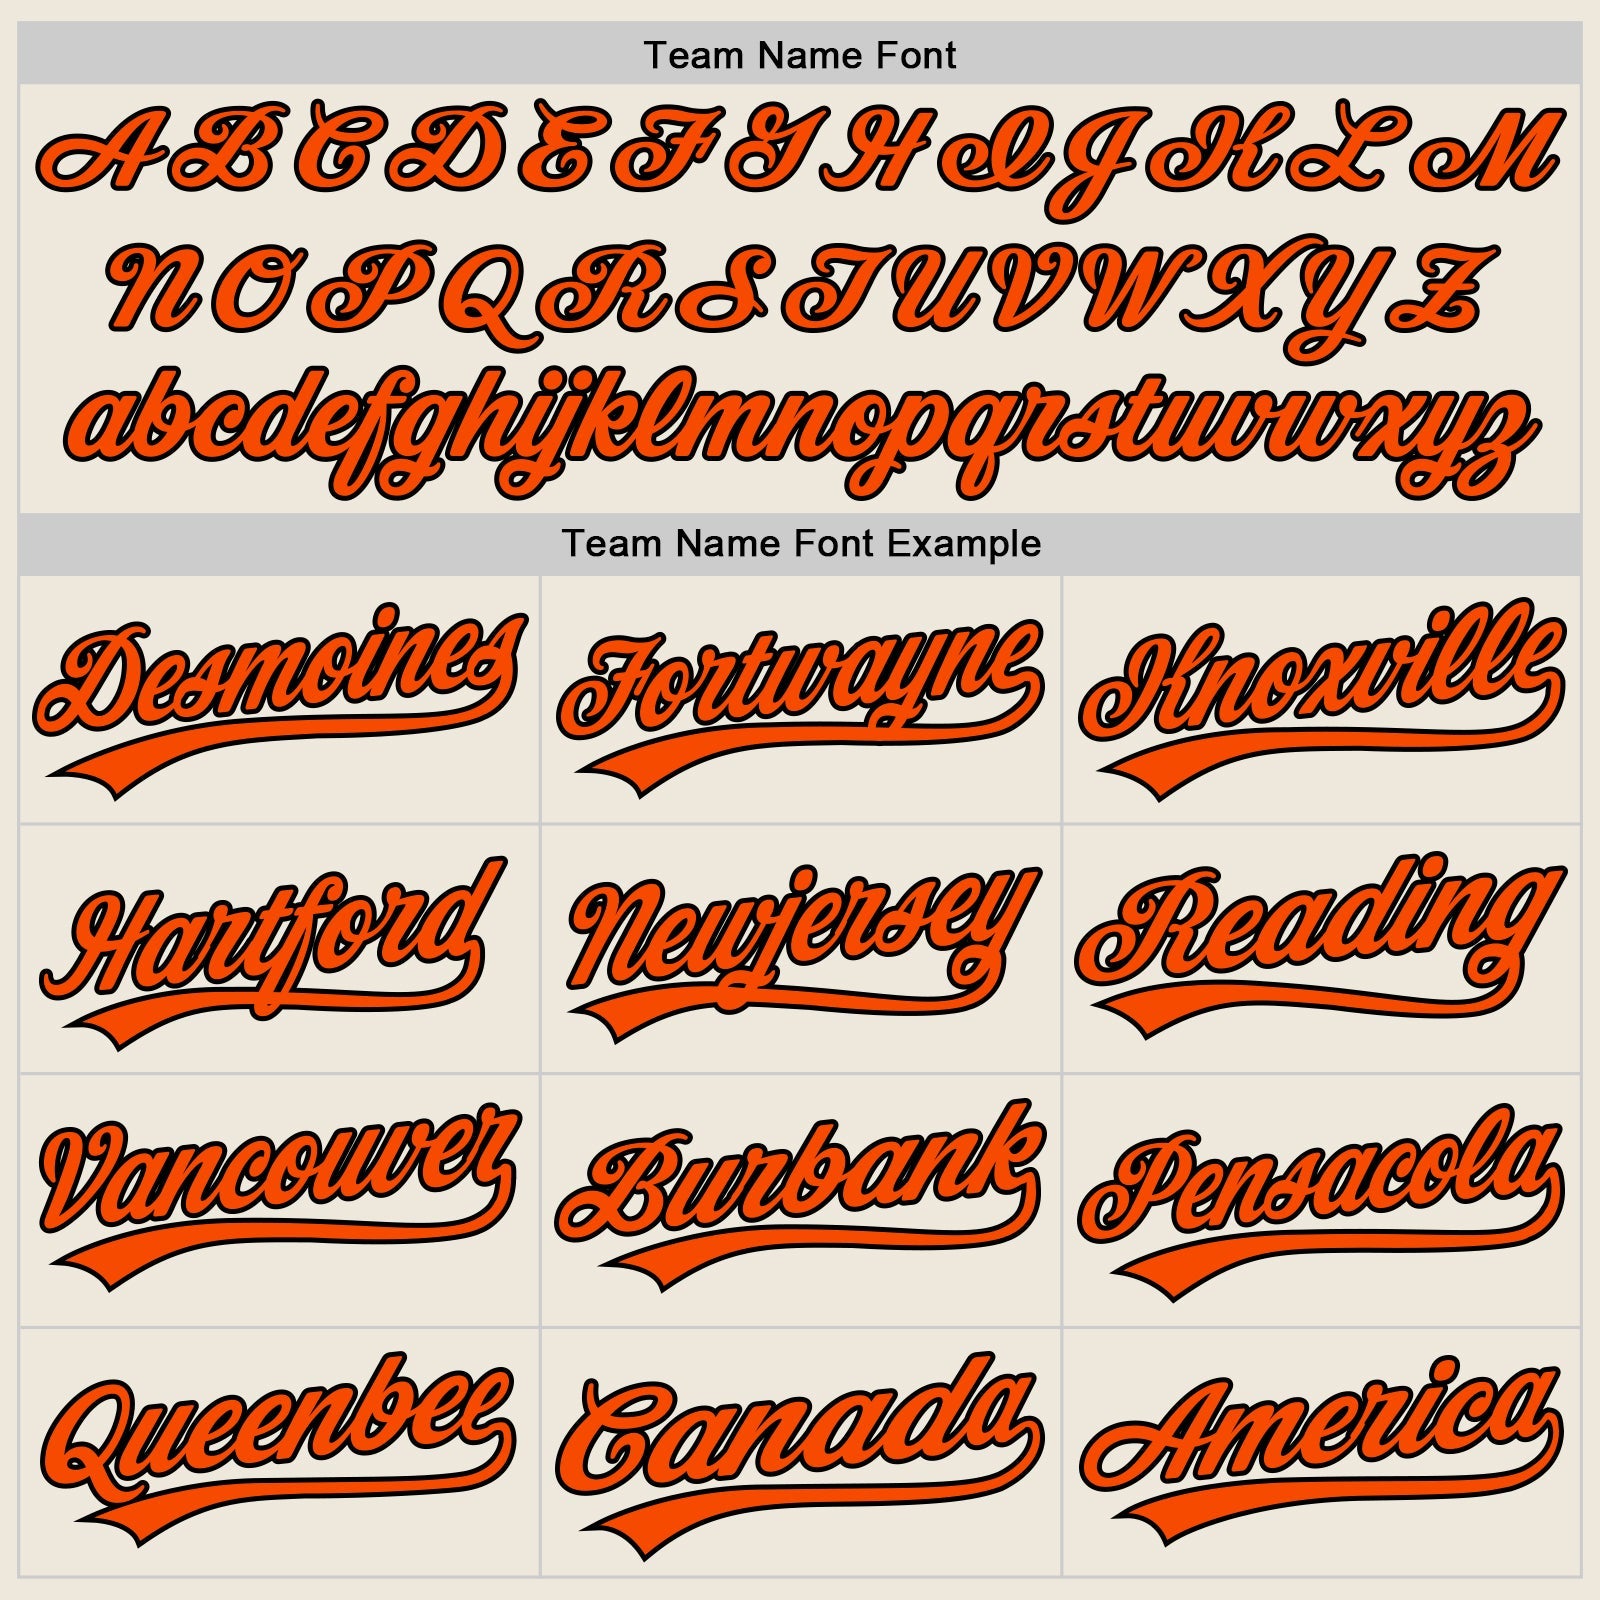 Custom Cream Orange-Black Authentic Baseball Jersey